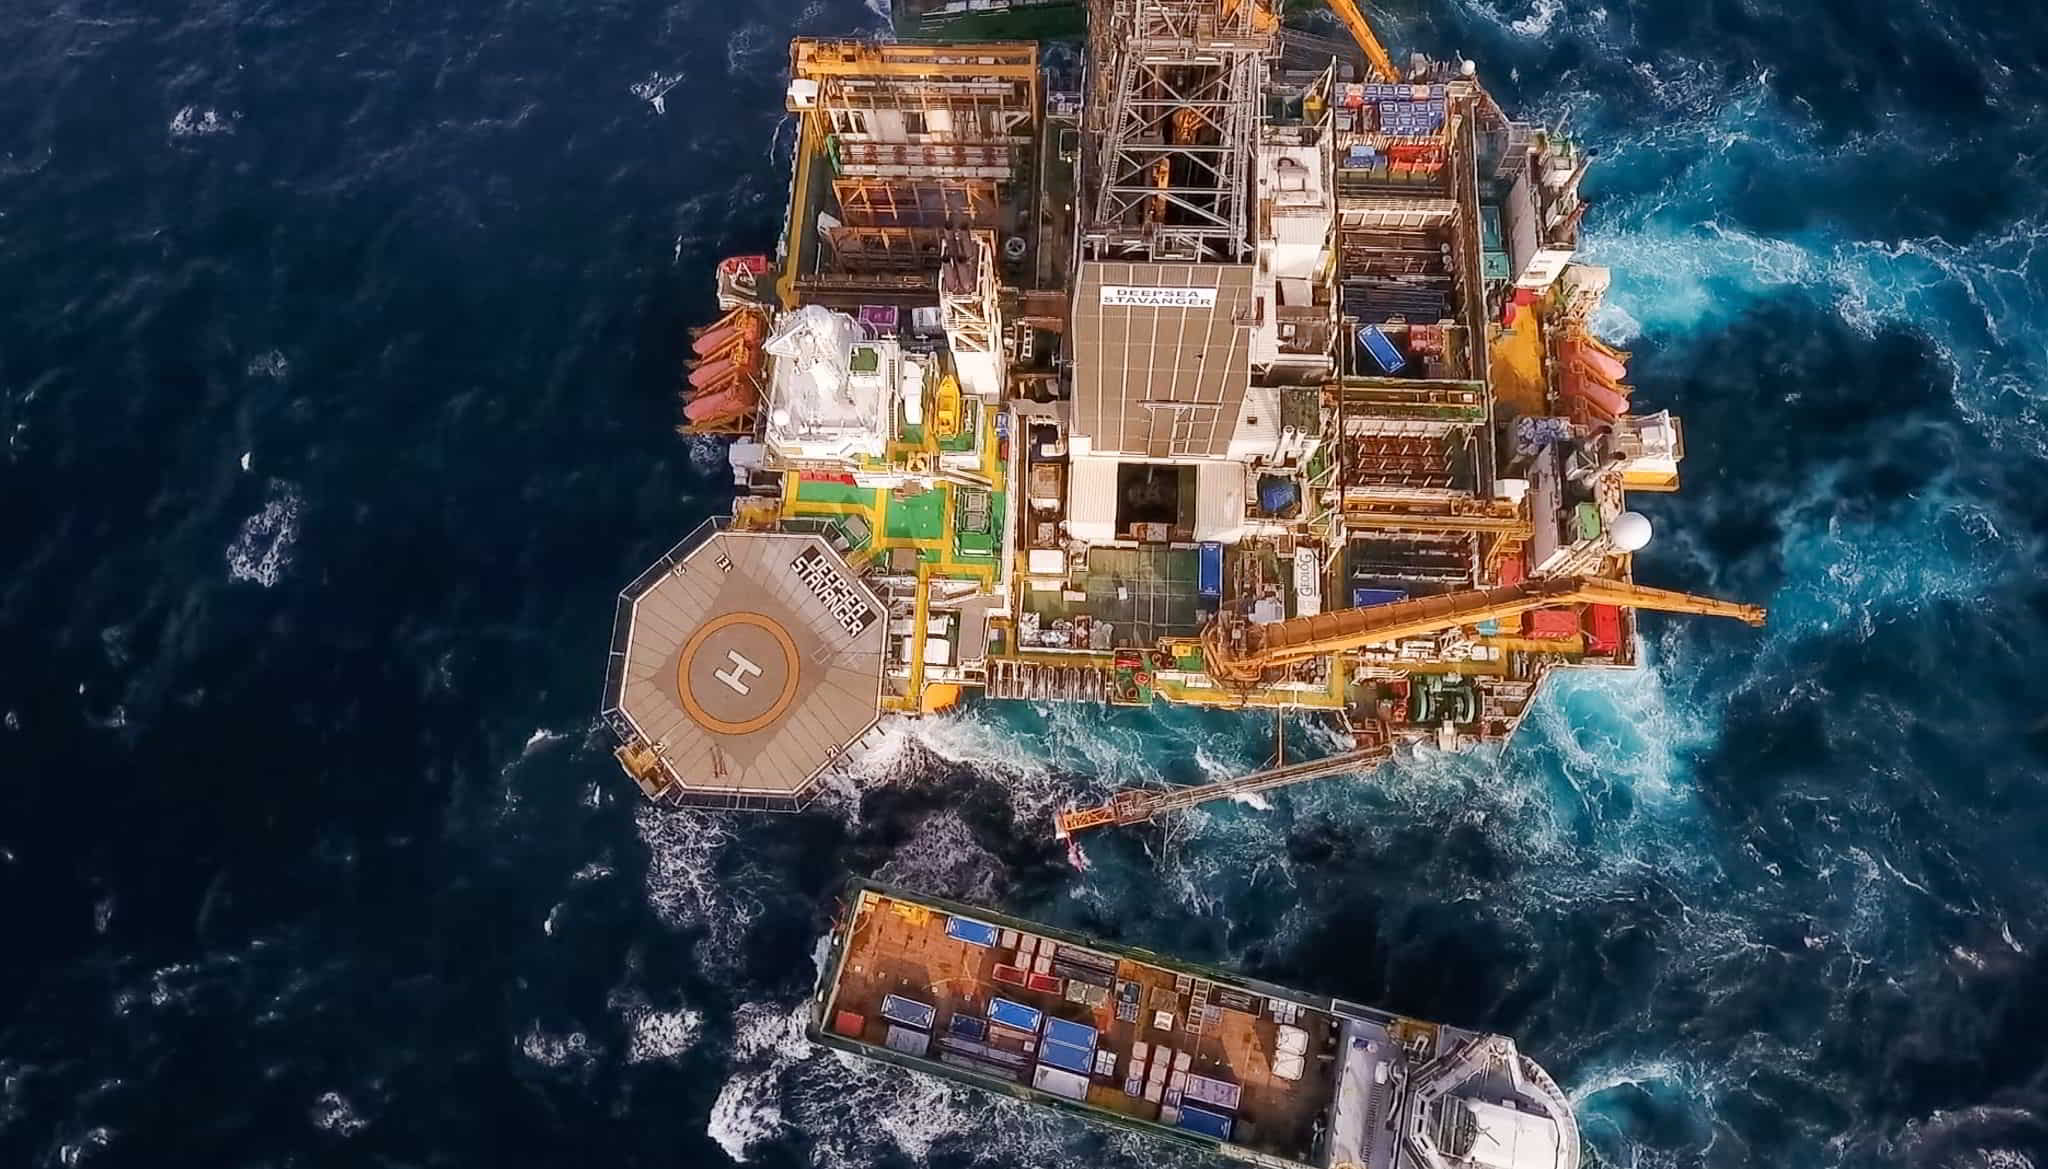 Two Norwegian Sea wells on Equinor’s drilling agenda for November